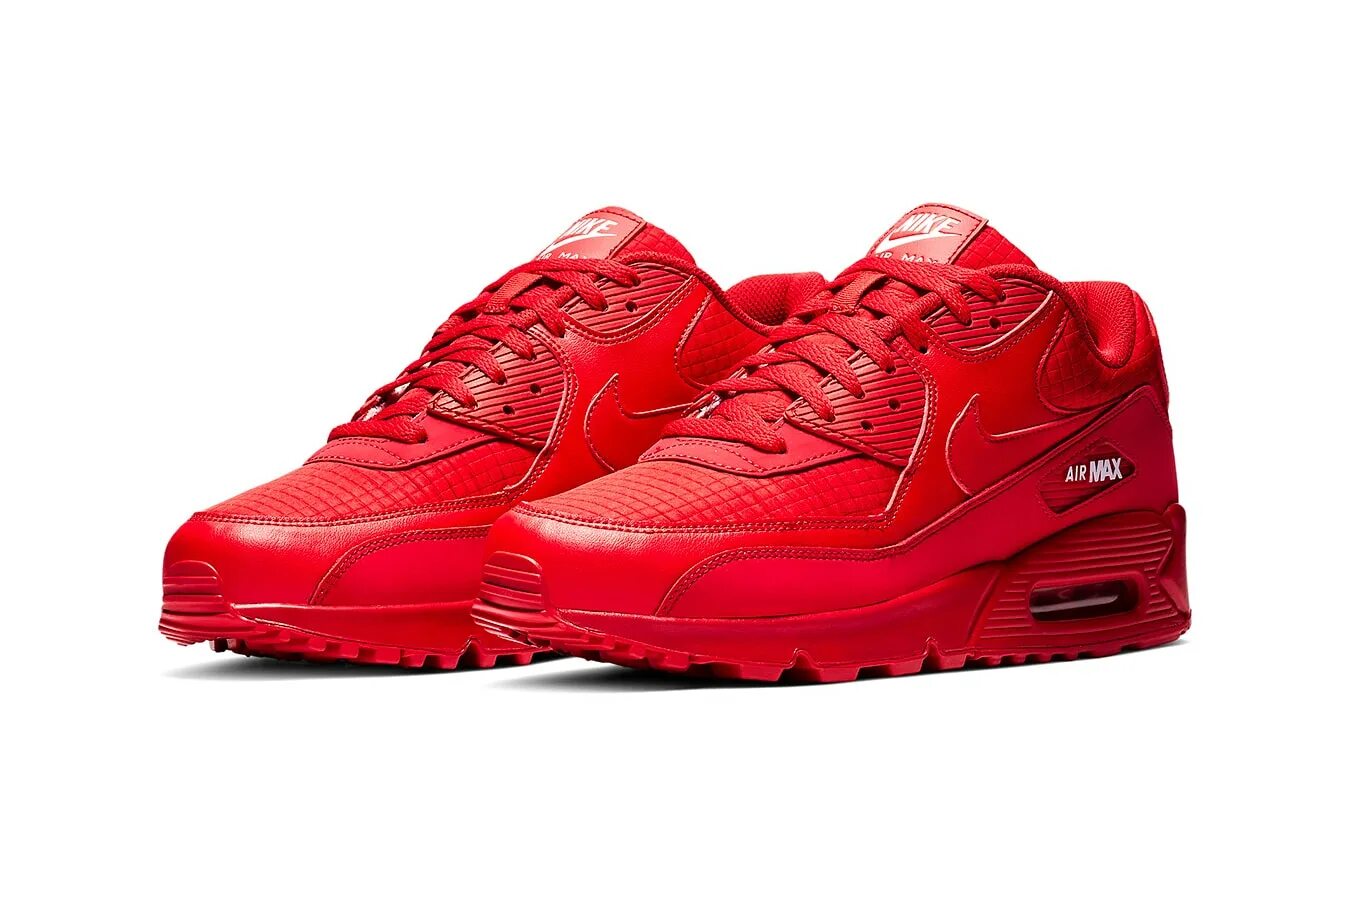 Nike Air Max 90 Red. Nike Air Max красные. Nike Air Max 90 Limited Edition. Nike Air Max 90 мужские красные. Красные найк купить